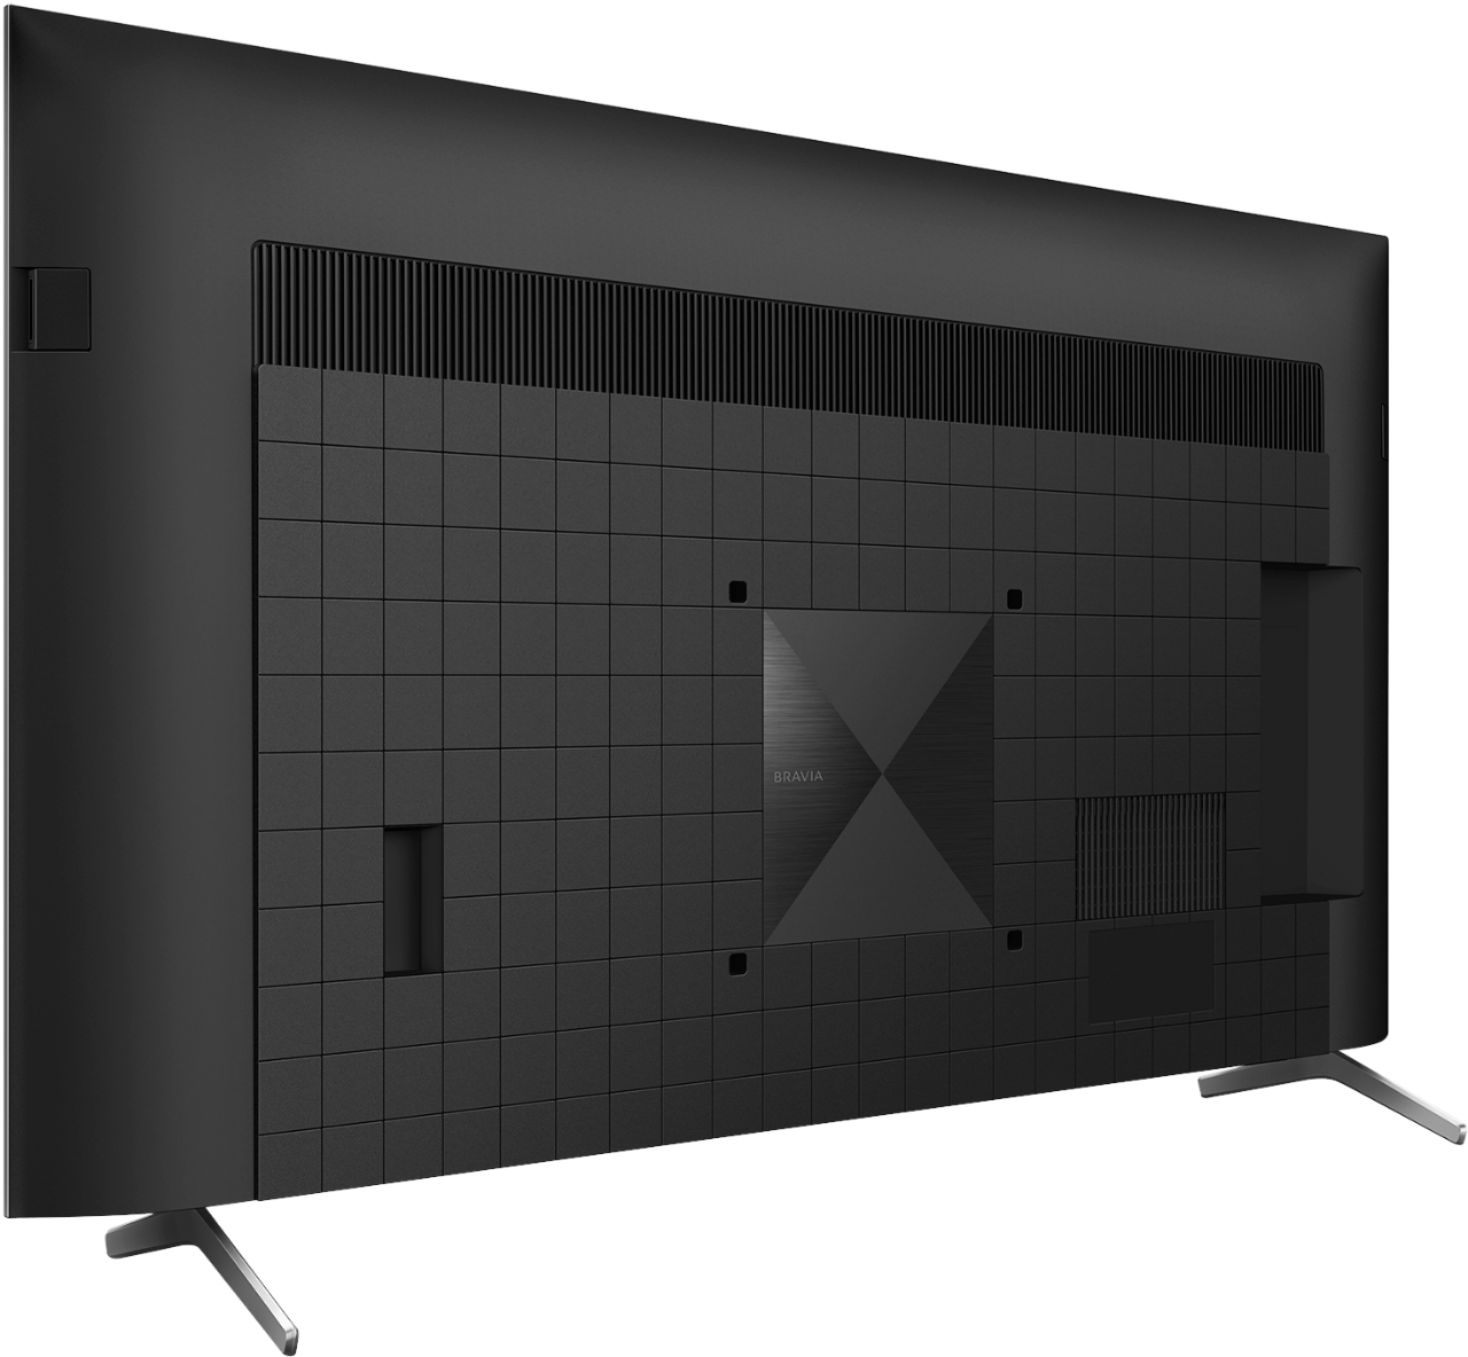 Angle View: Sony - 50" Class BRAVIA XR X90J Series LED 4K UHD Smart Google TV